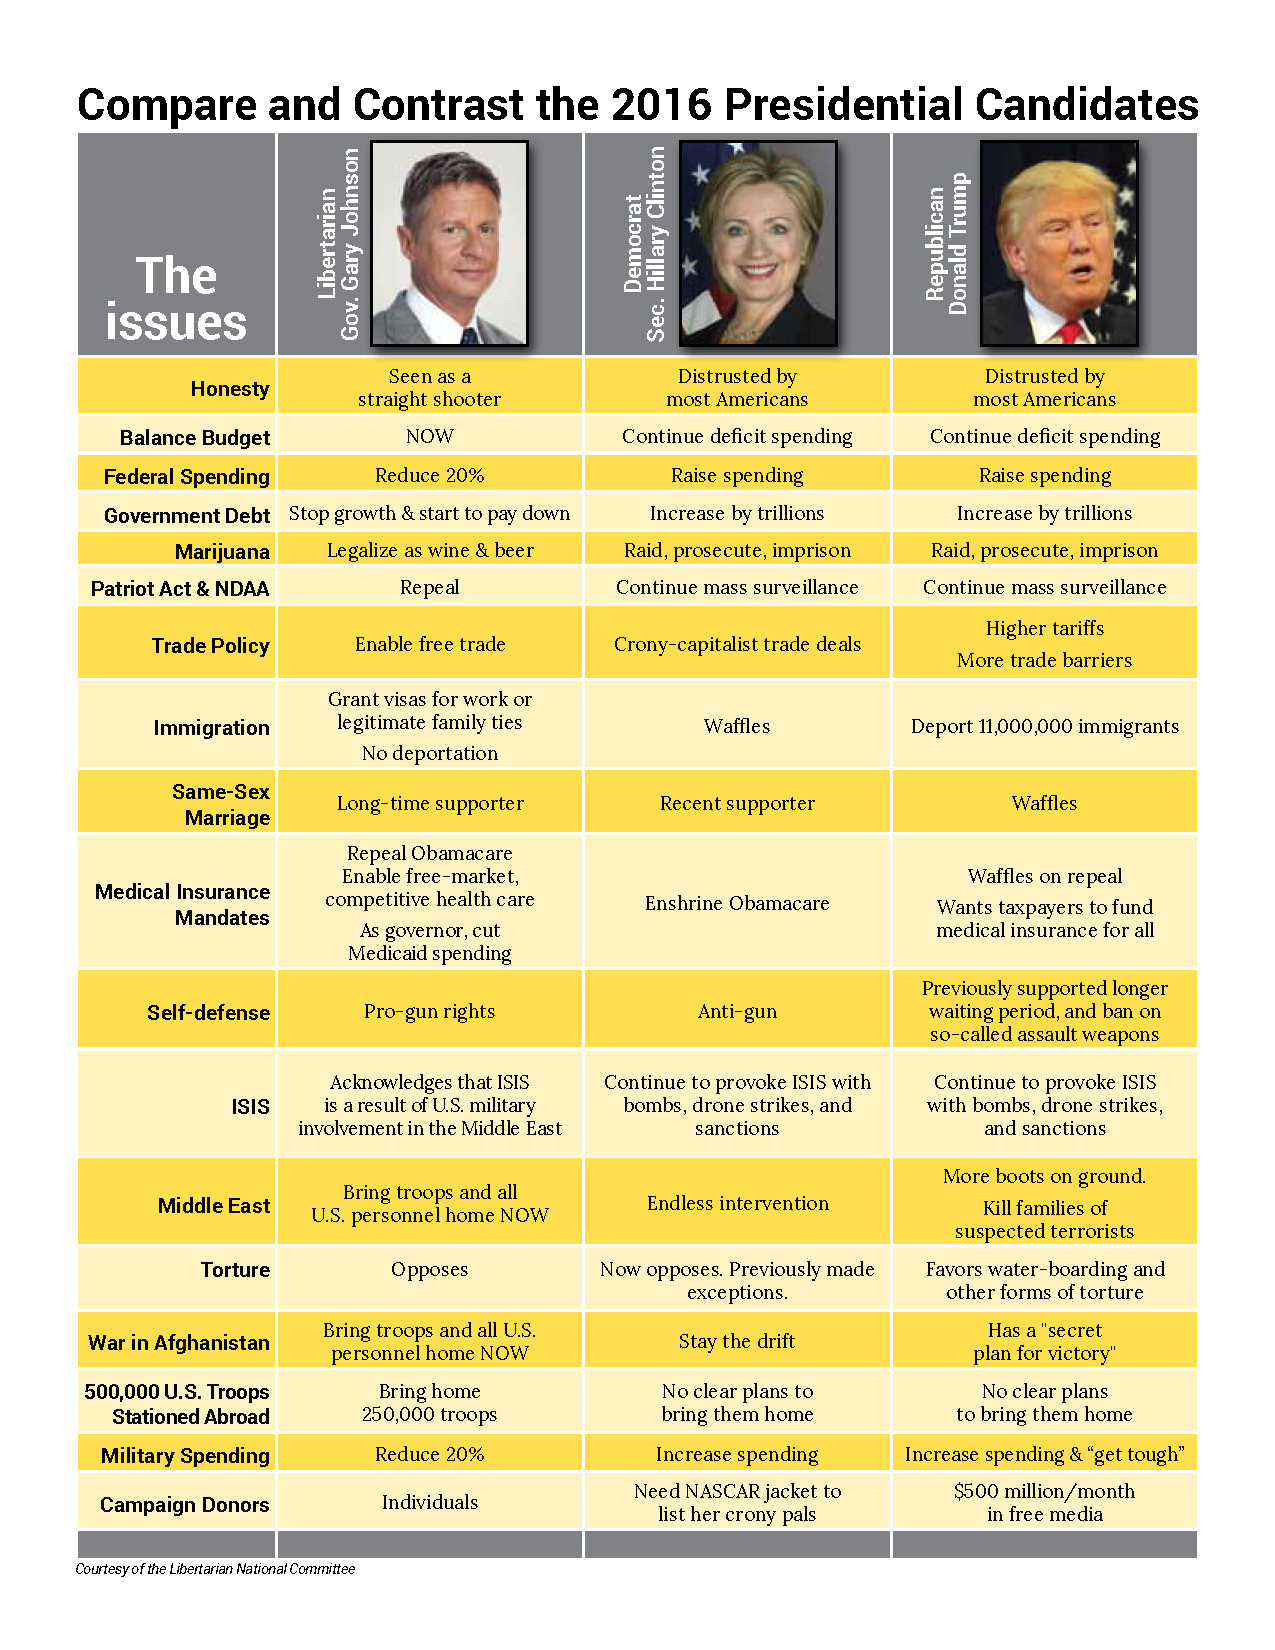 2016 Presidential Candidate Comparison